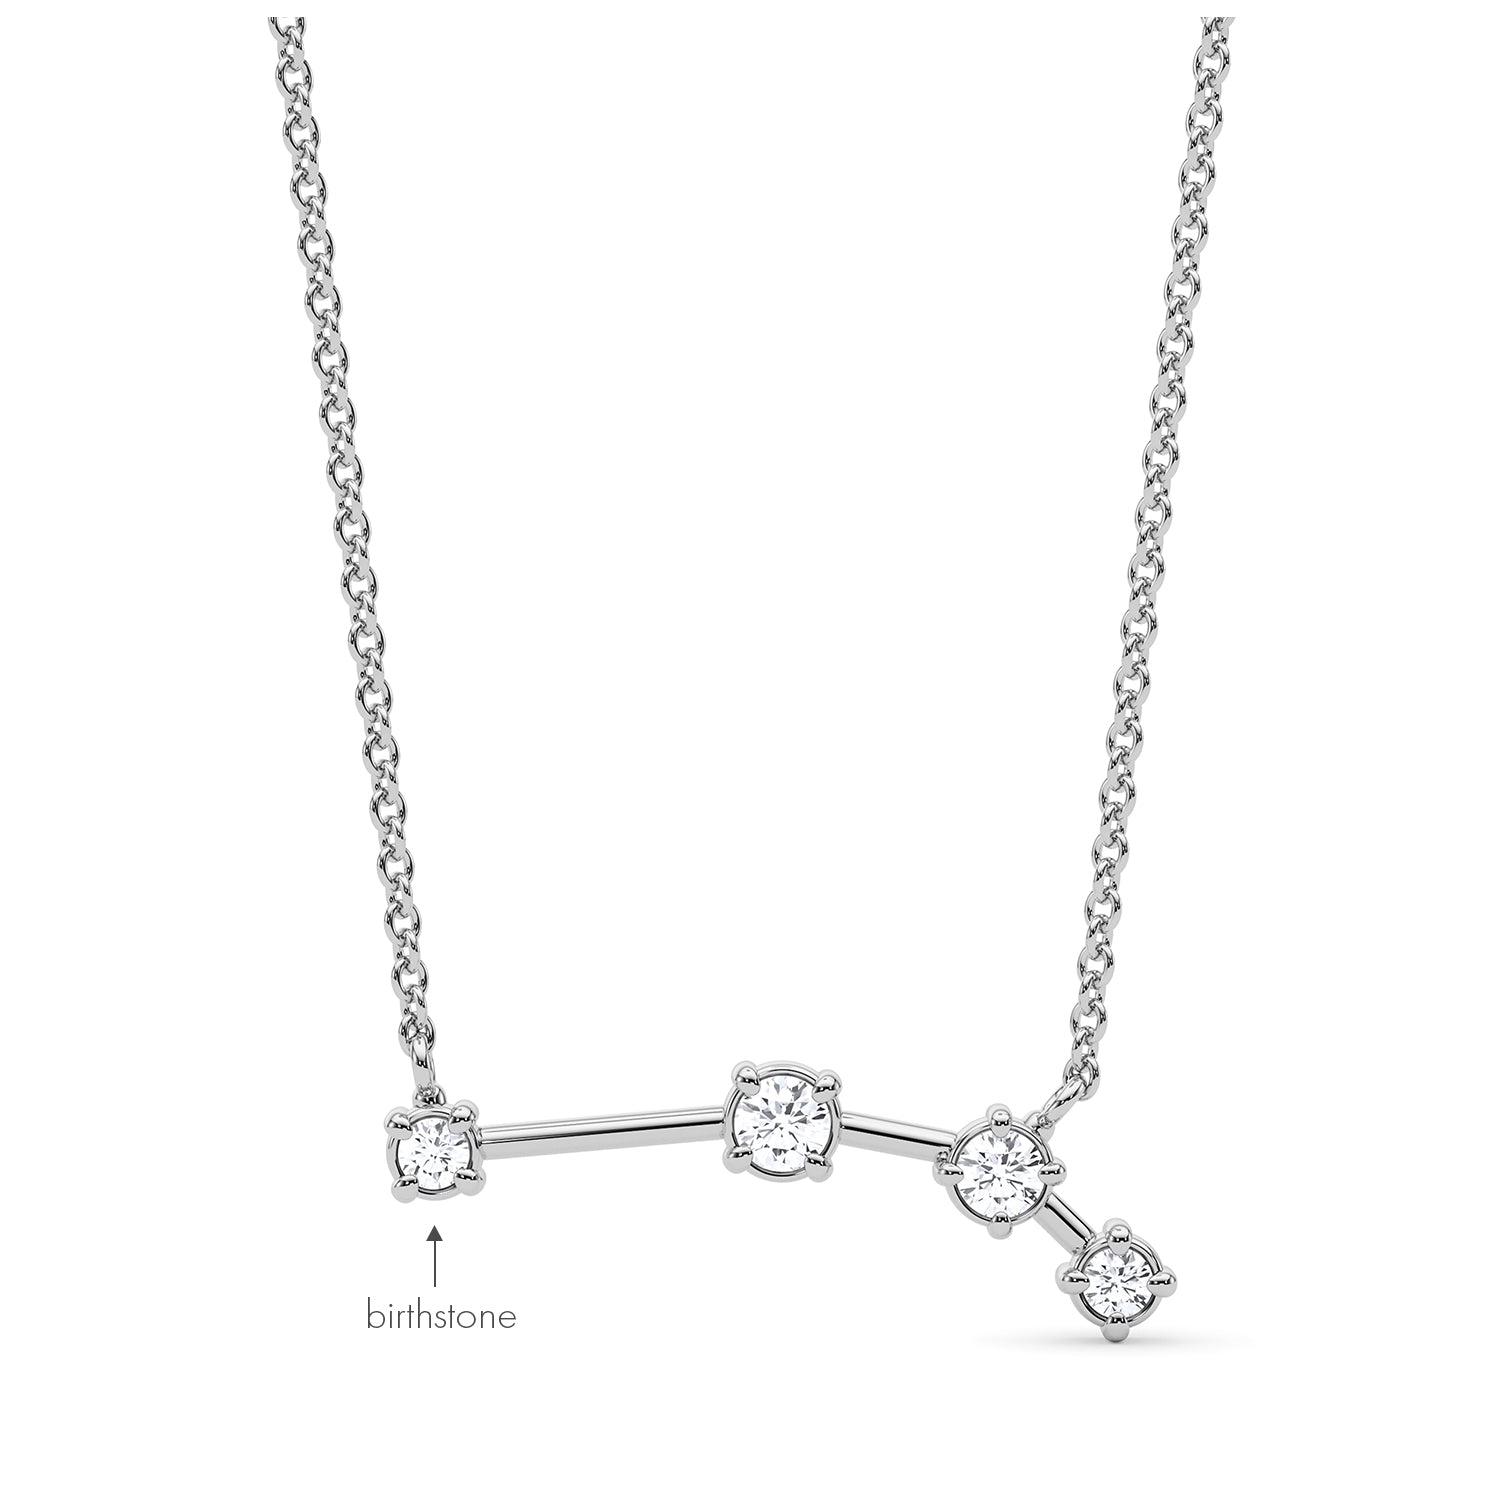 Aries Constellation Necklace